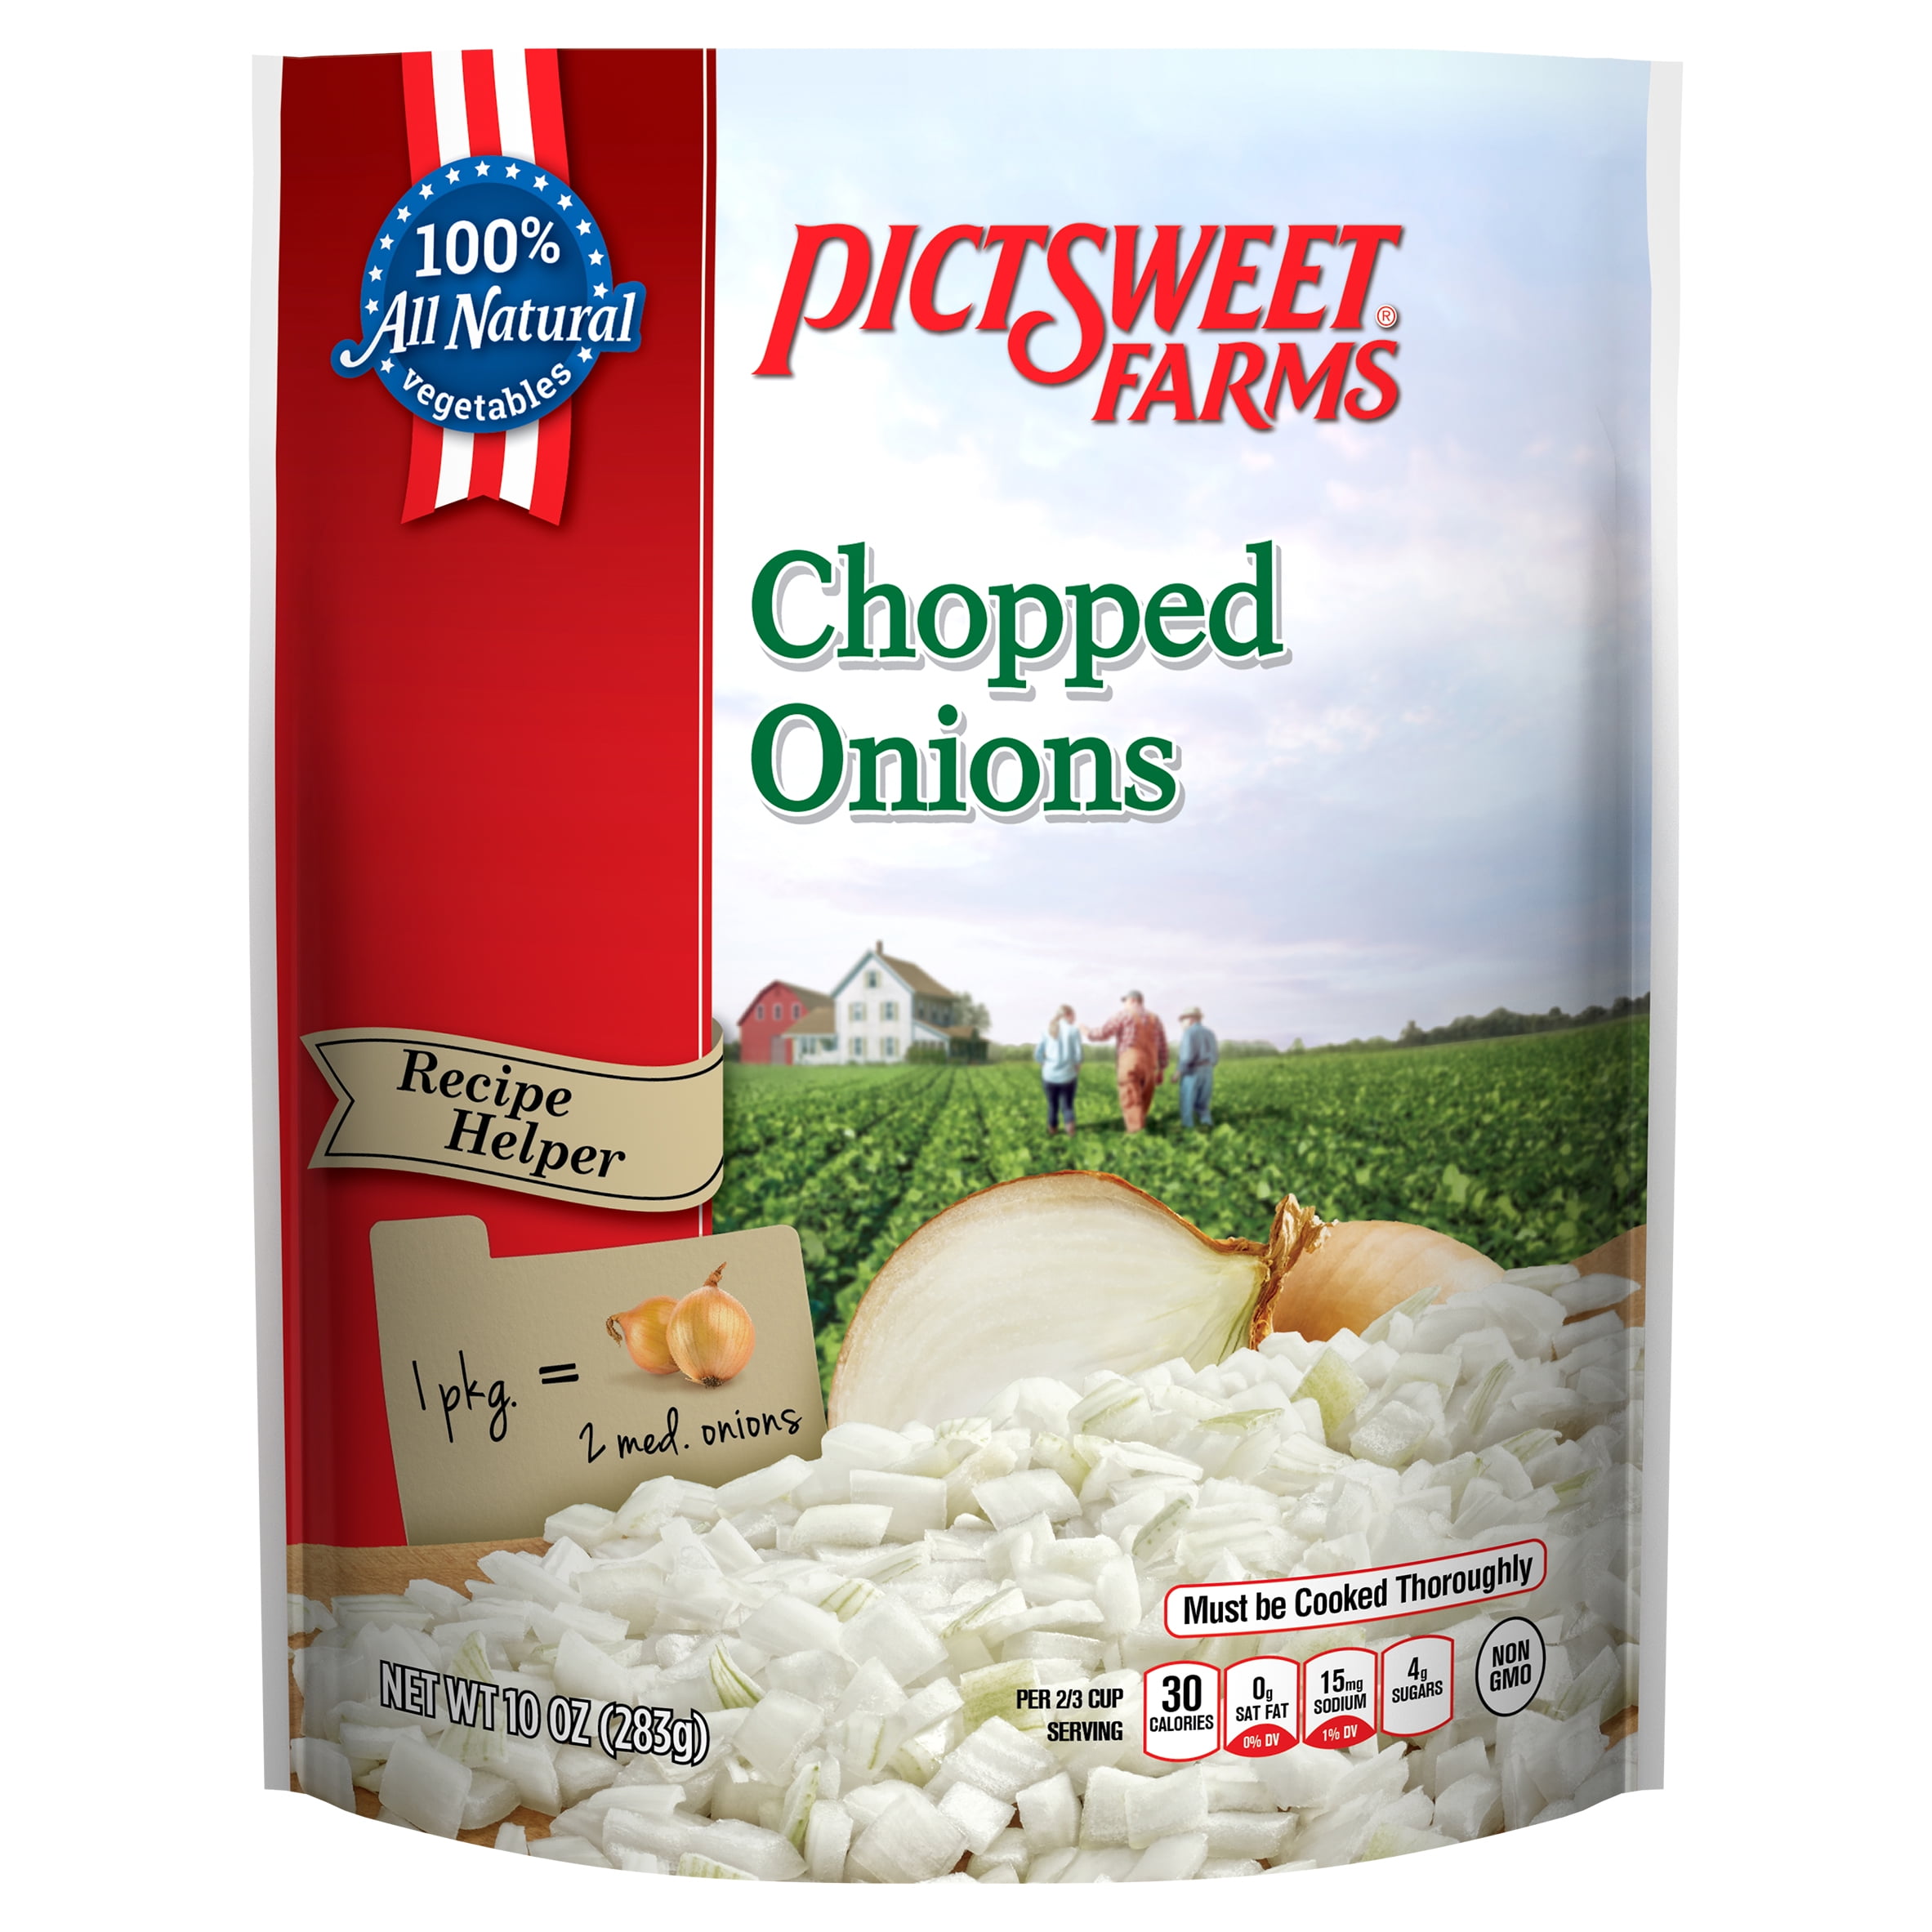 Pictsweet Farms® Recipe Helper Chopped Onions, Frozen, 10 oz